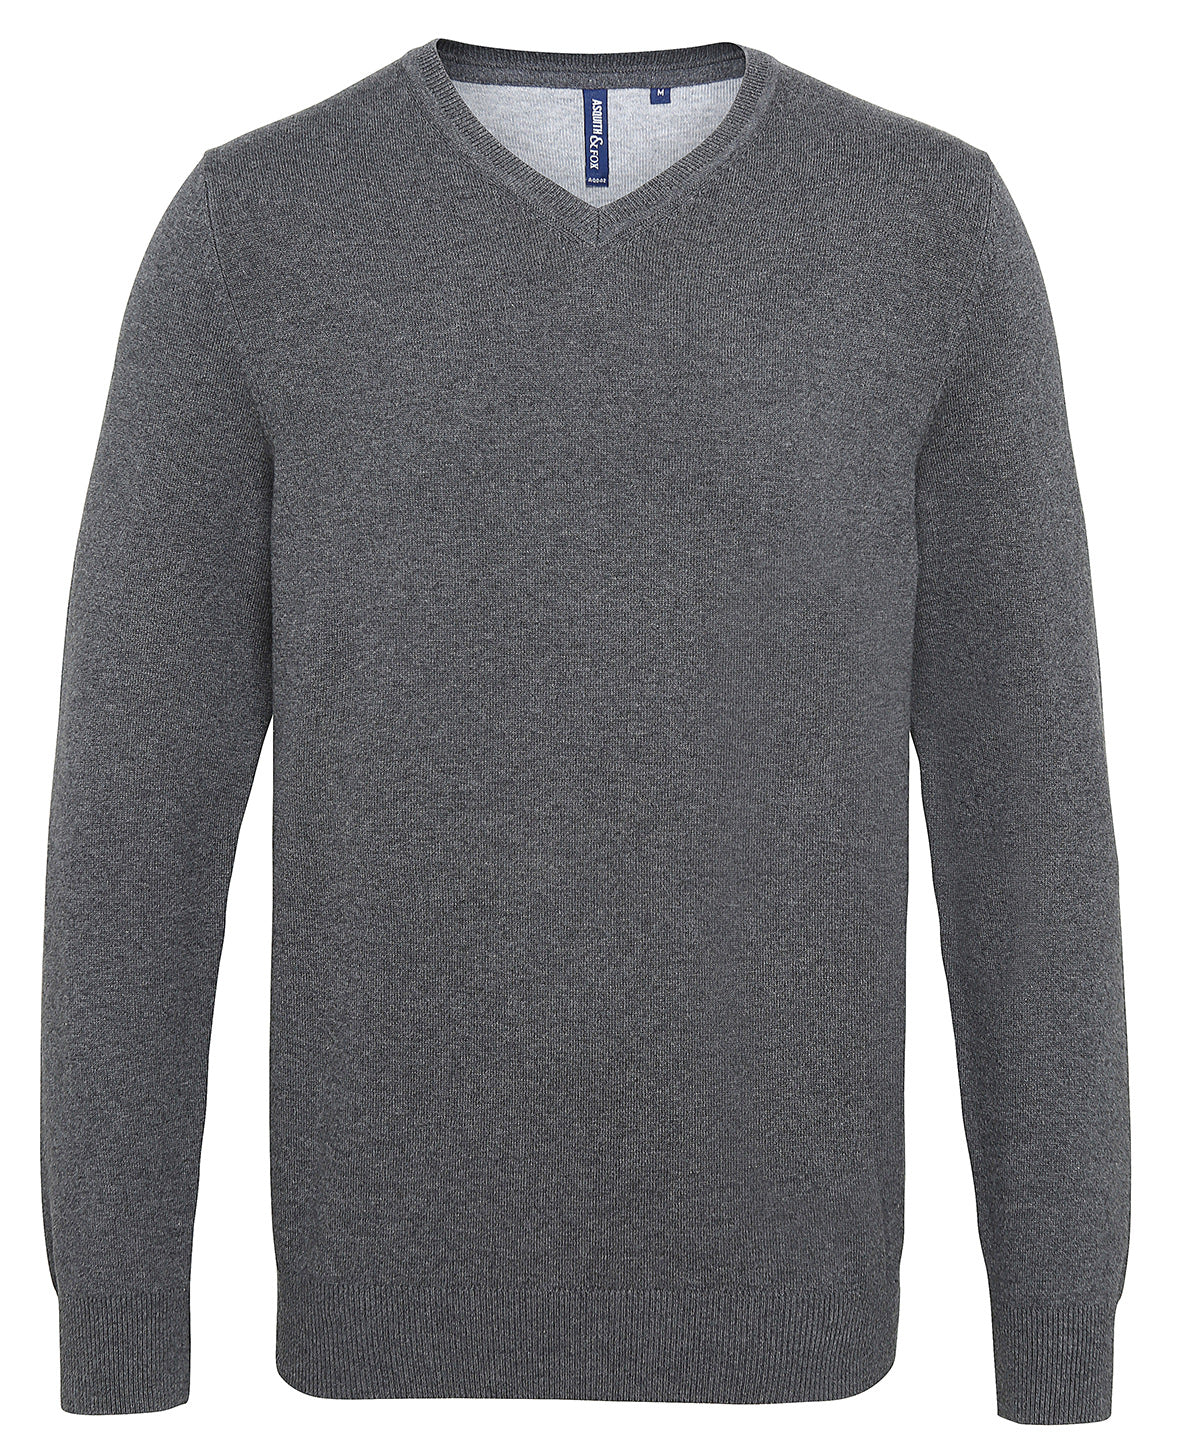 Men's cotton blend v-neck sweater